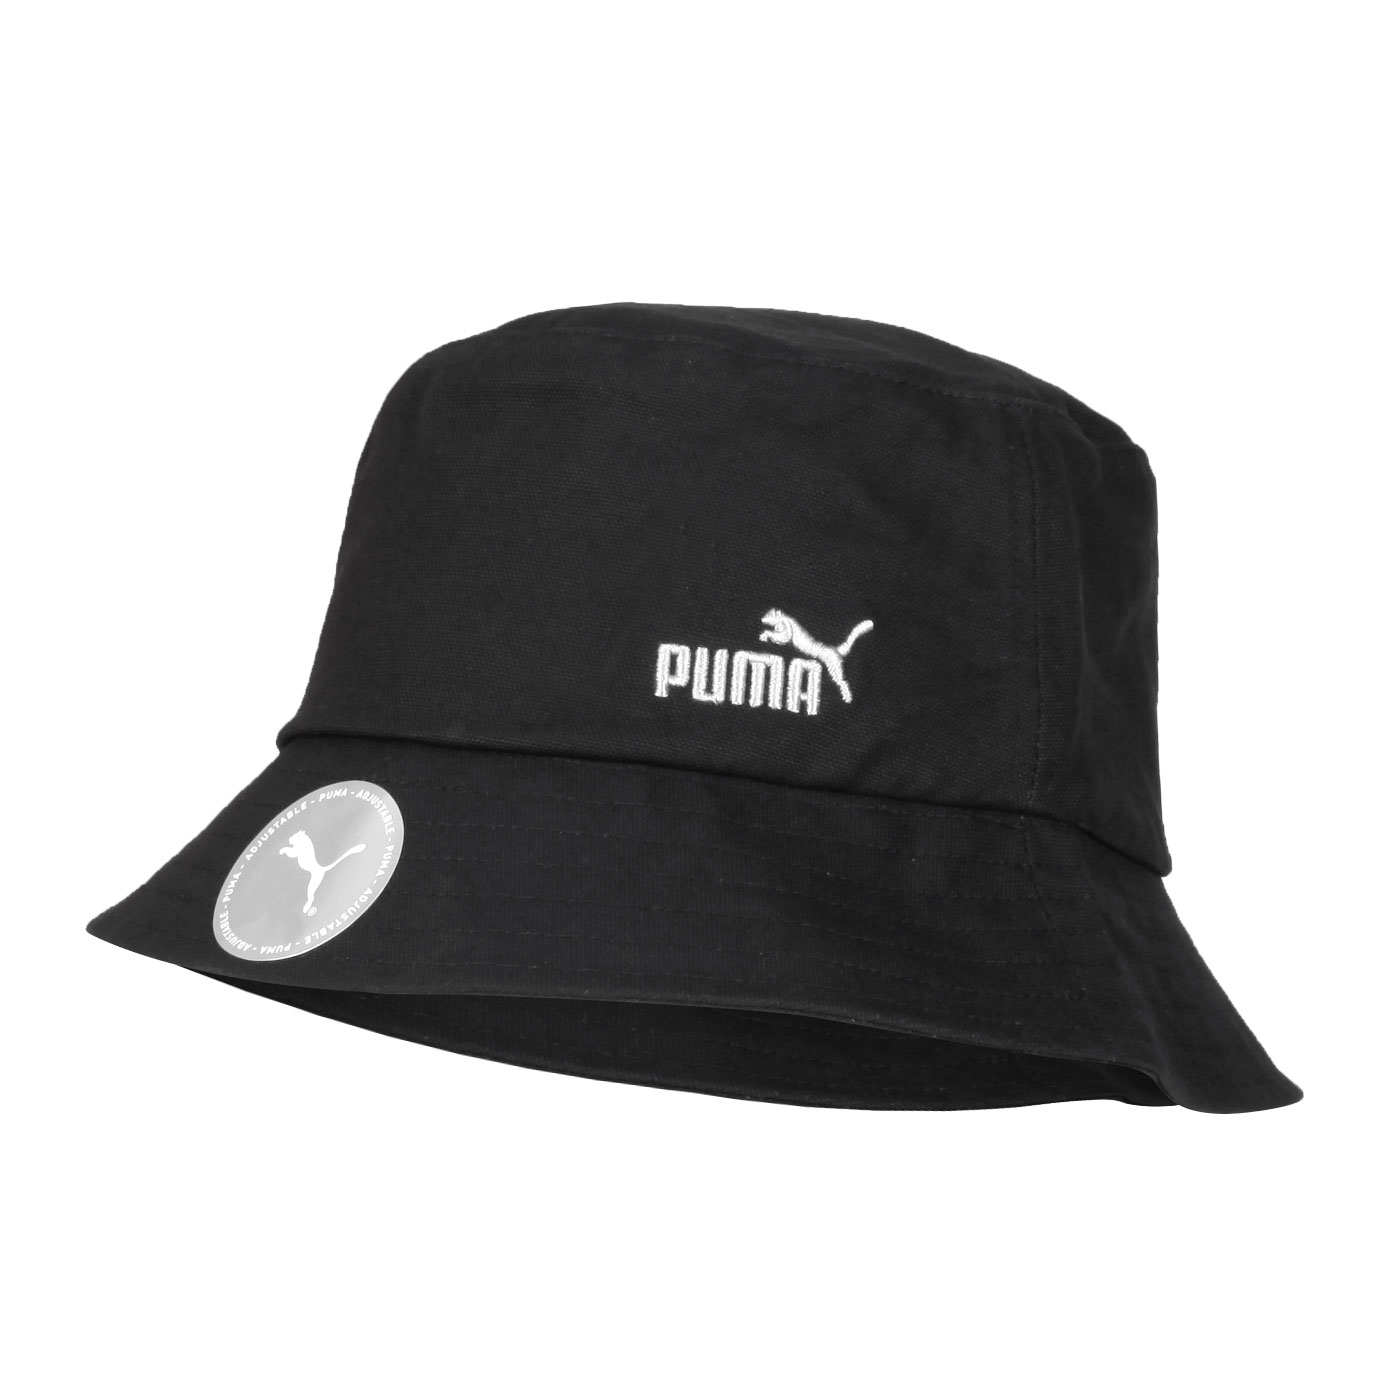 PUMA Core漁夫帽 02403701 - 黑灰